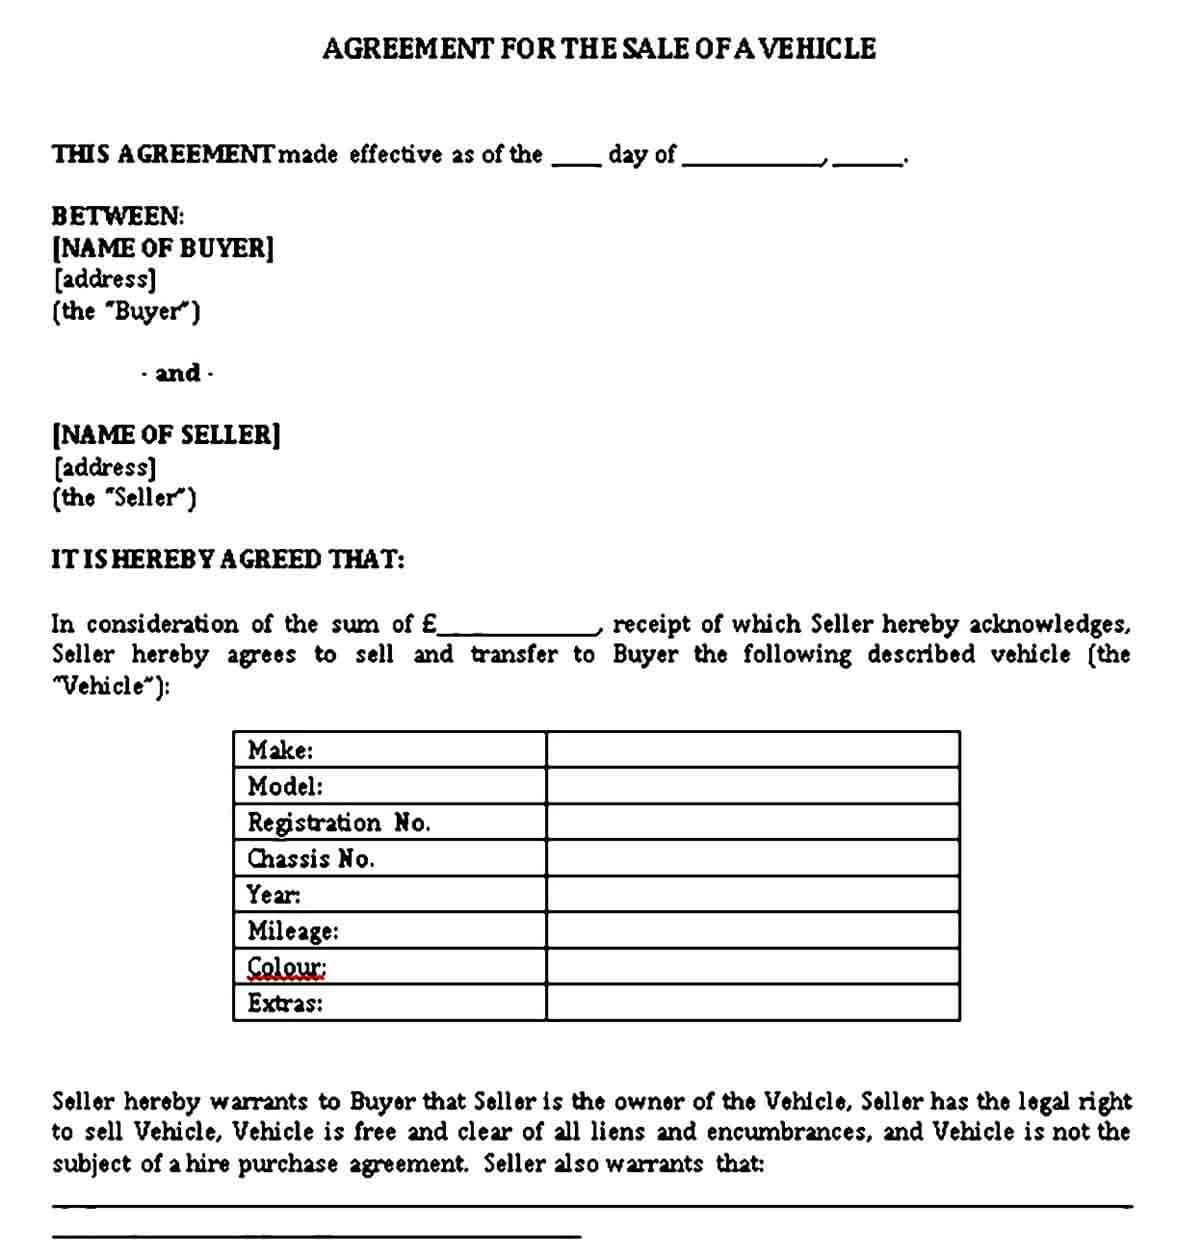 Sample Agreement of Vehicle Sale